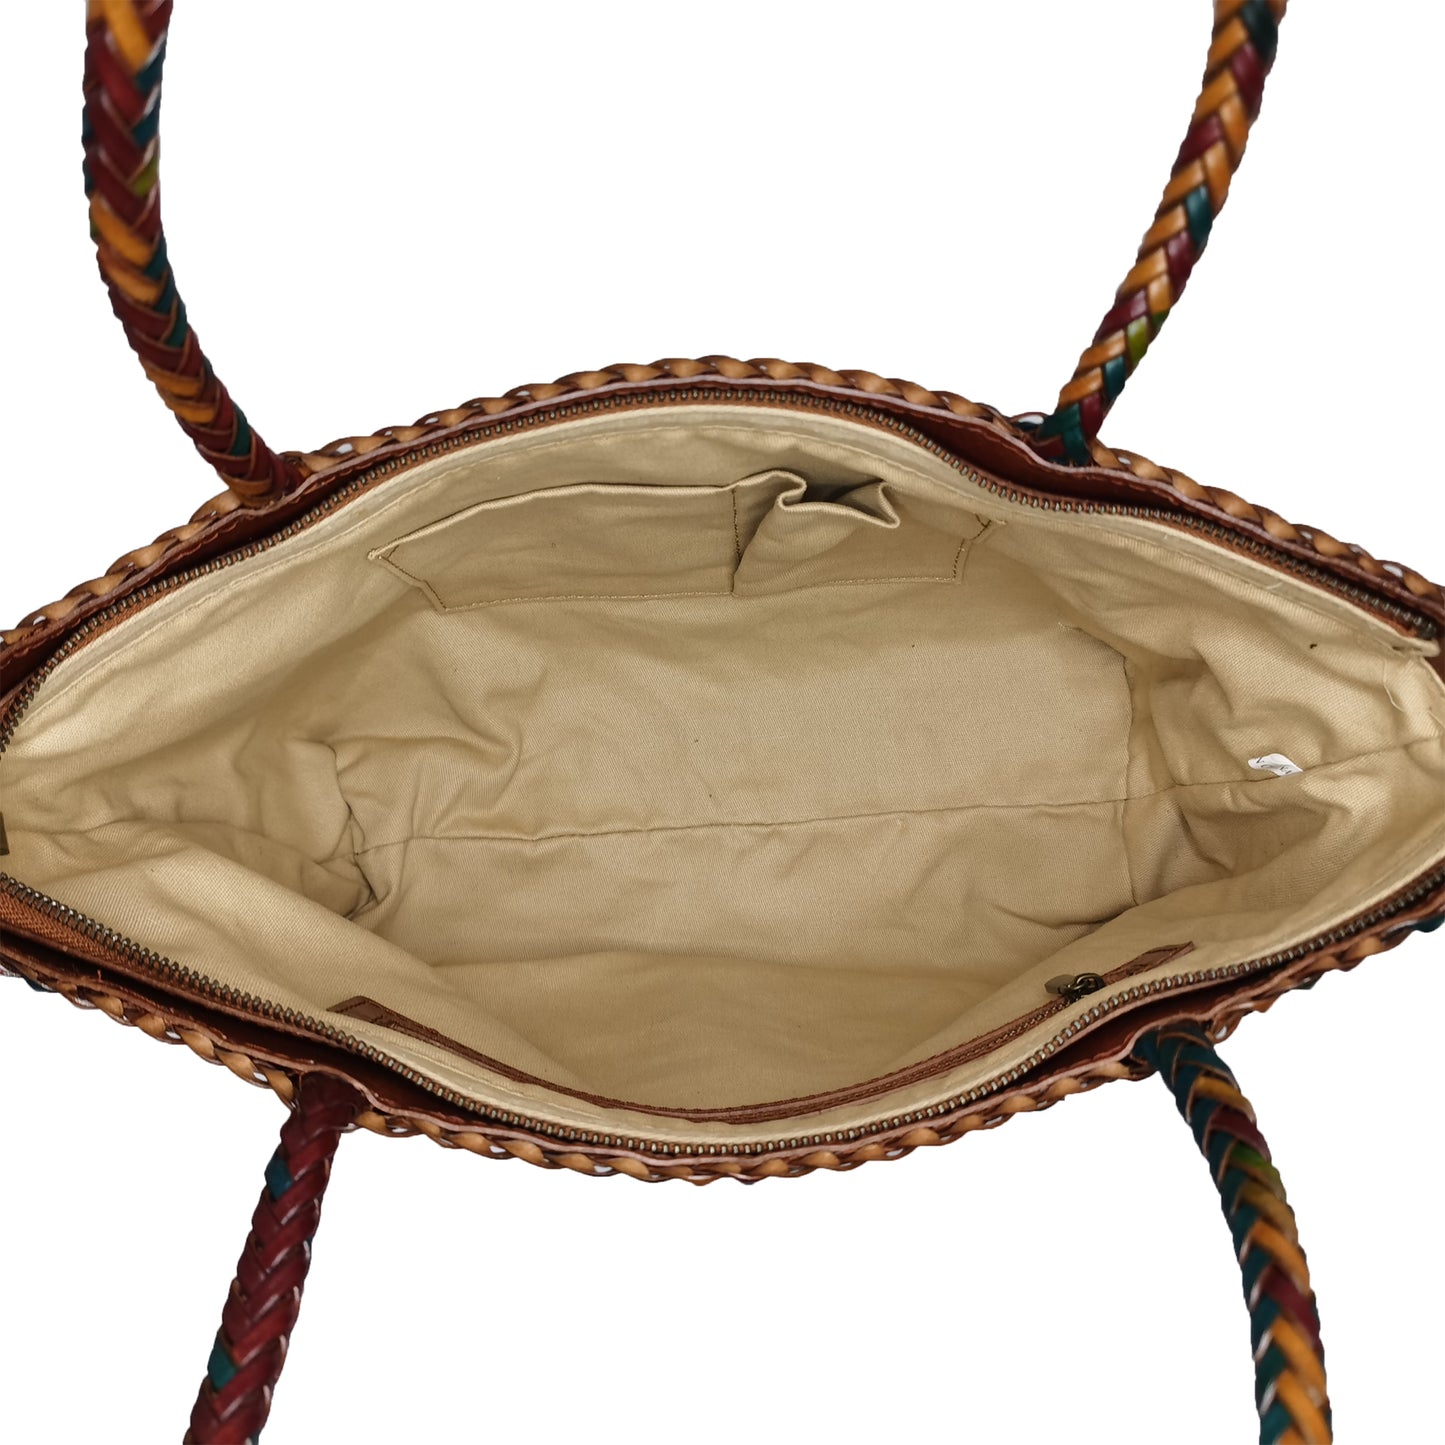 Women's handwoven genuine cowhide leather handbag Top Handle shopping tote V2